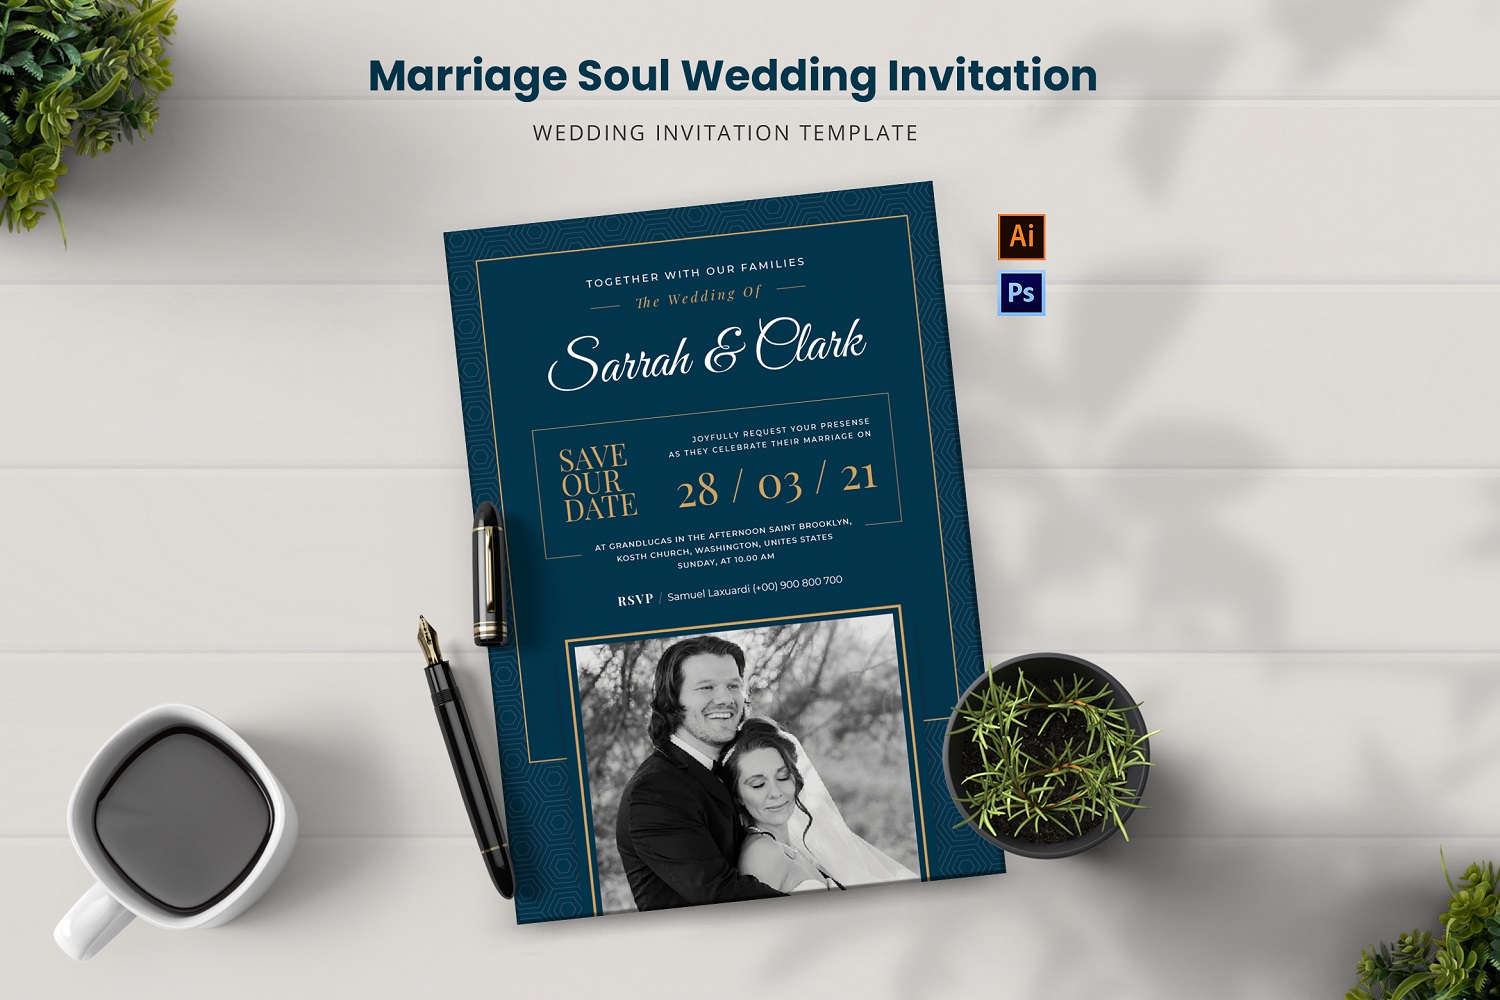 Marriage Soul Wedding Invitation